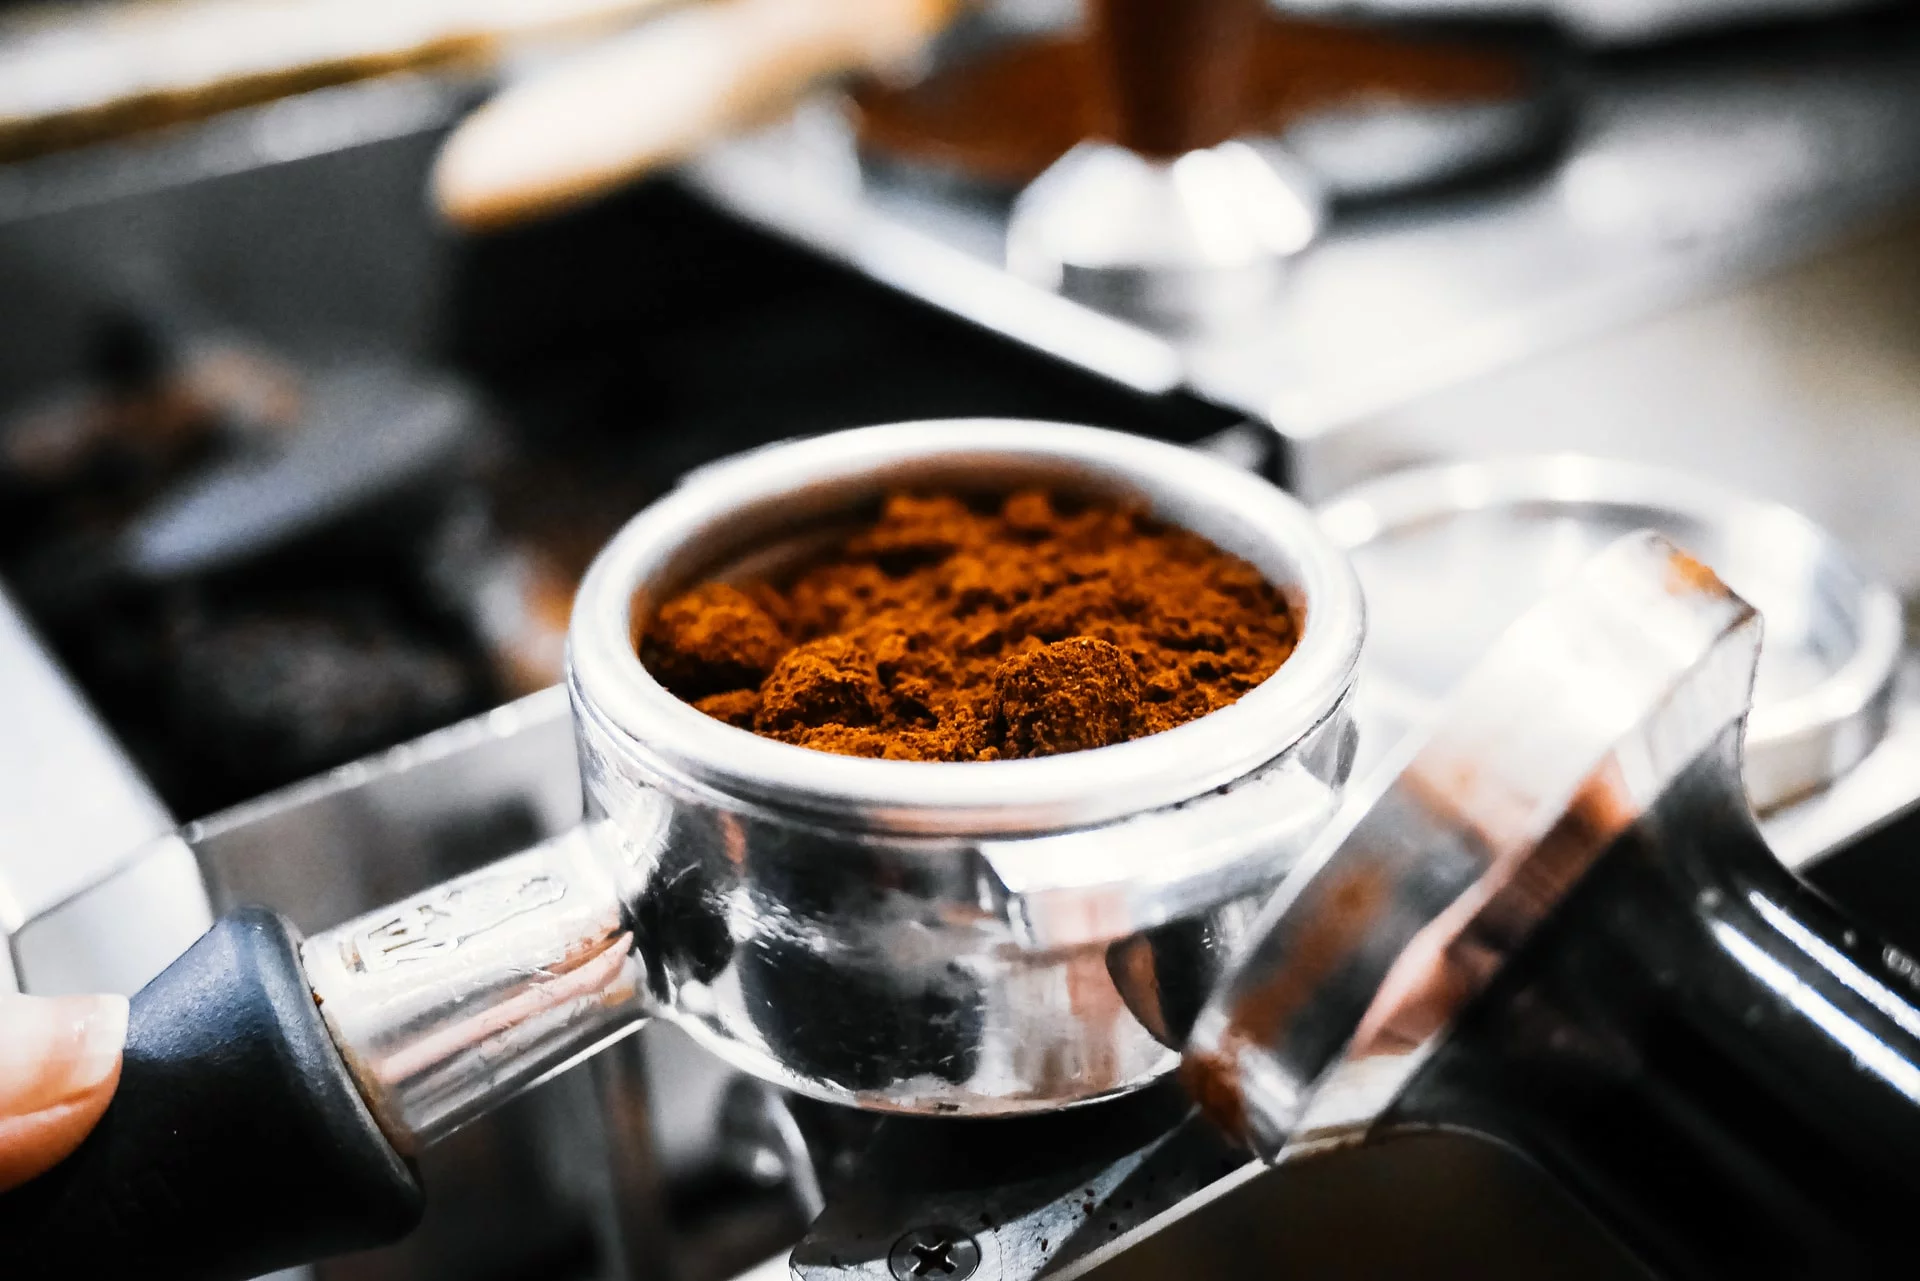 freshly-ground-coffee-from-coffee-grinder-2-picjumbo-com2-min